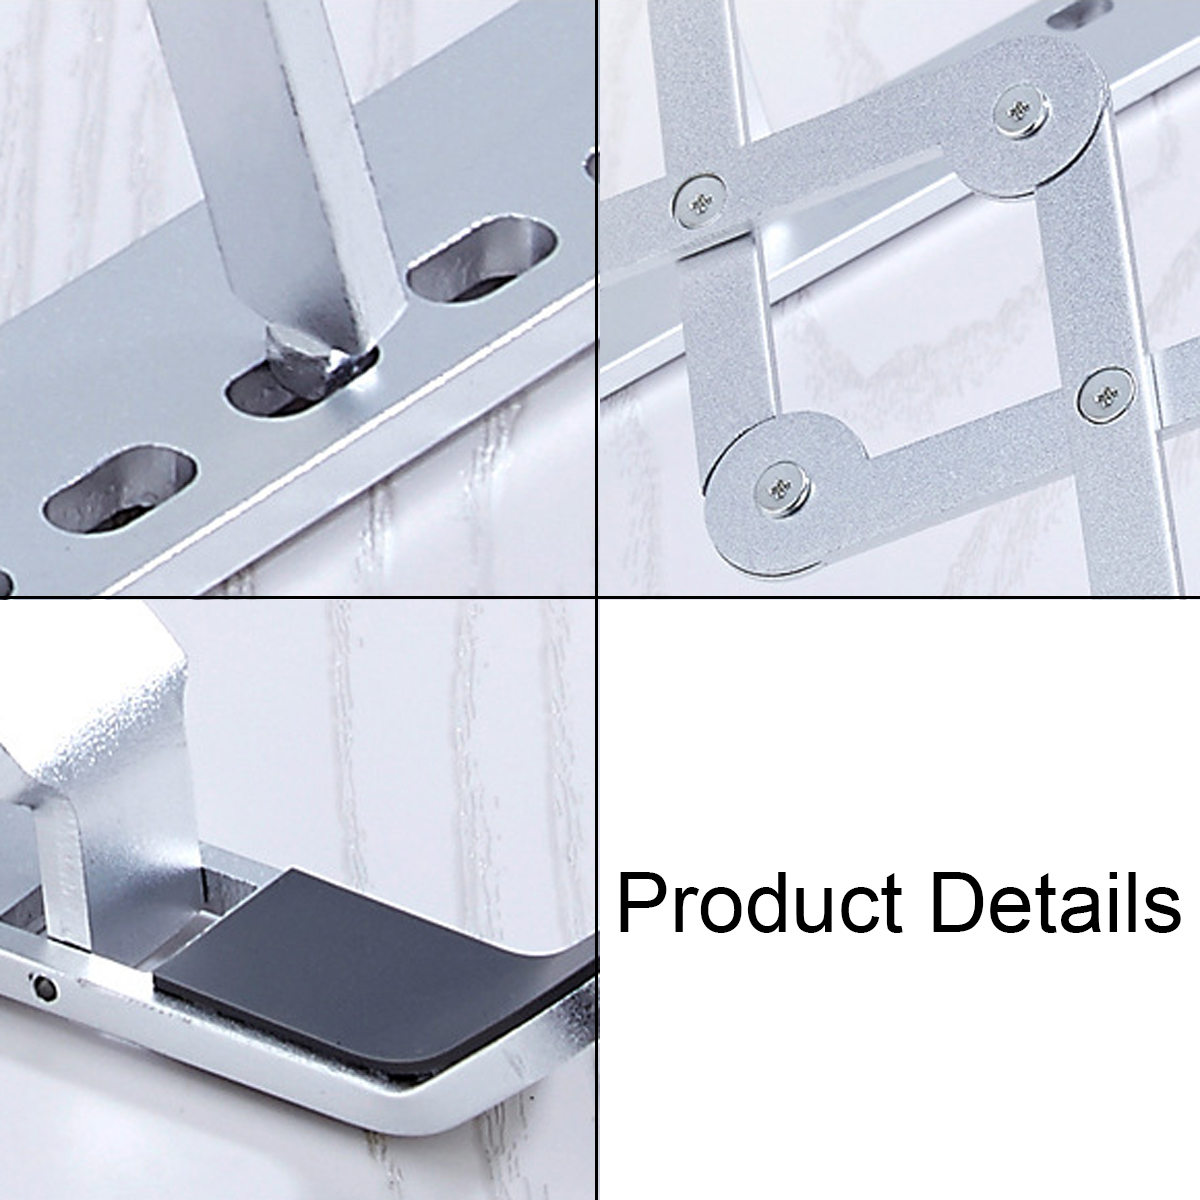 Aluminum-Alloy-Adjustable-Foldable-Laptop-Stand-Non-Slip-Desktop-Notebook-Holder-Cooling-Bracket-Ris-1780242-6